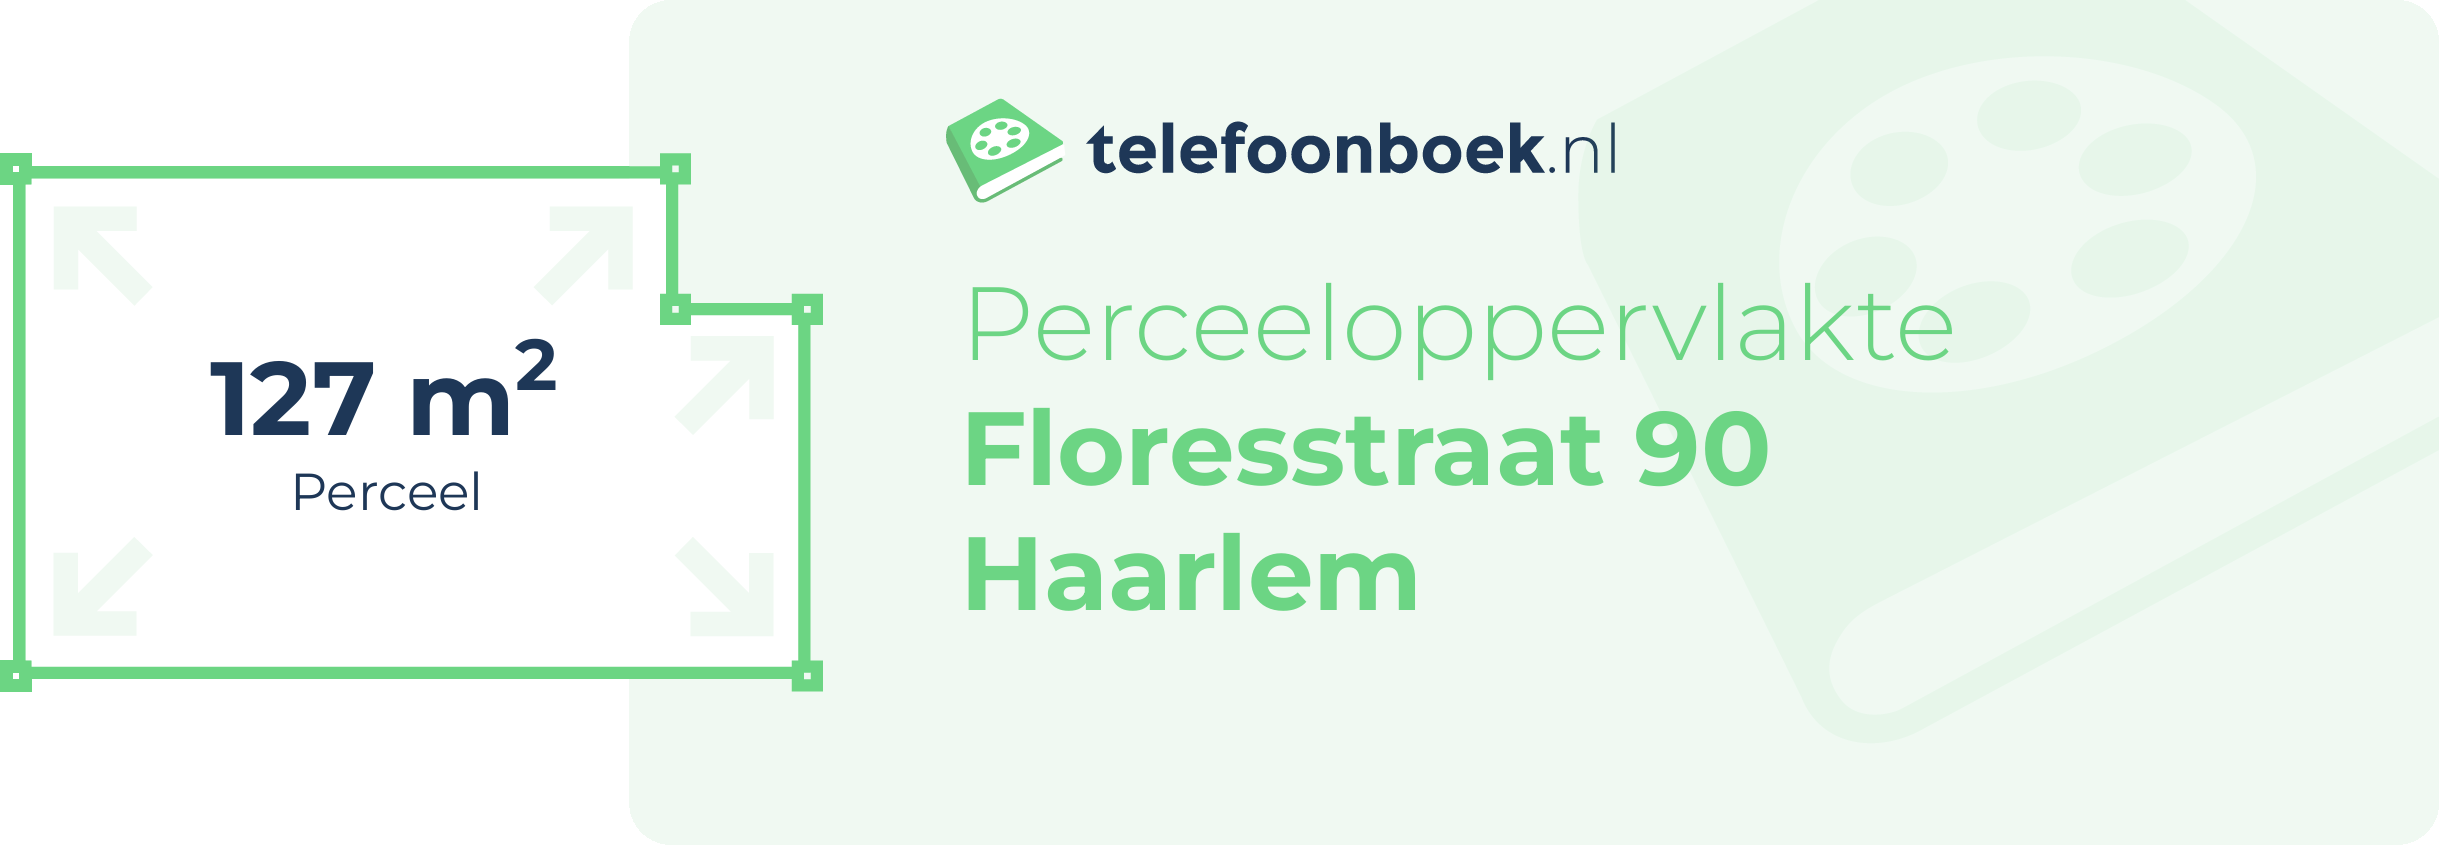 Perceeloppervlakte Floresstraat 90 Haarlem